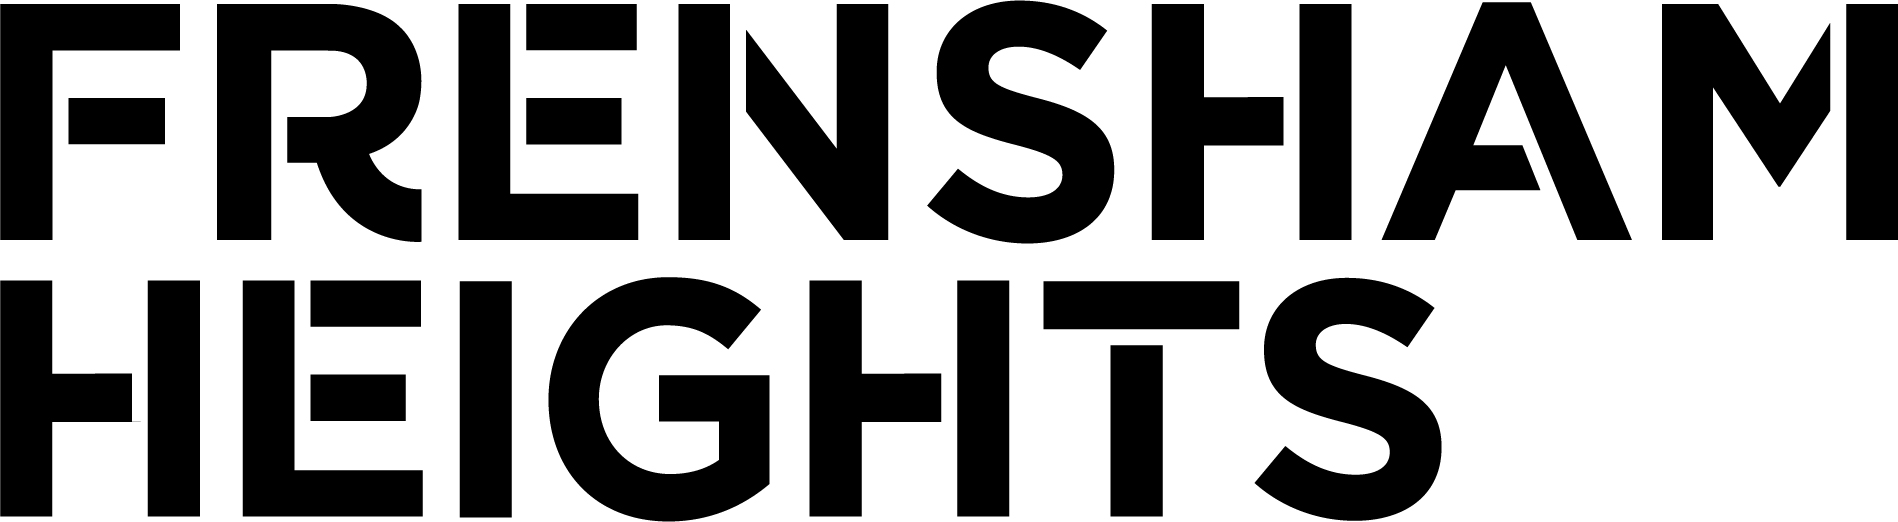 Frensham_Heights_Logo_Black_S.png